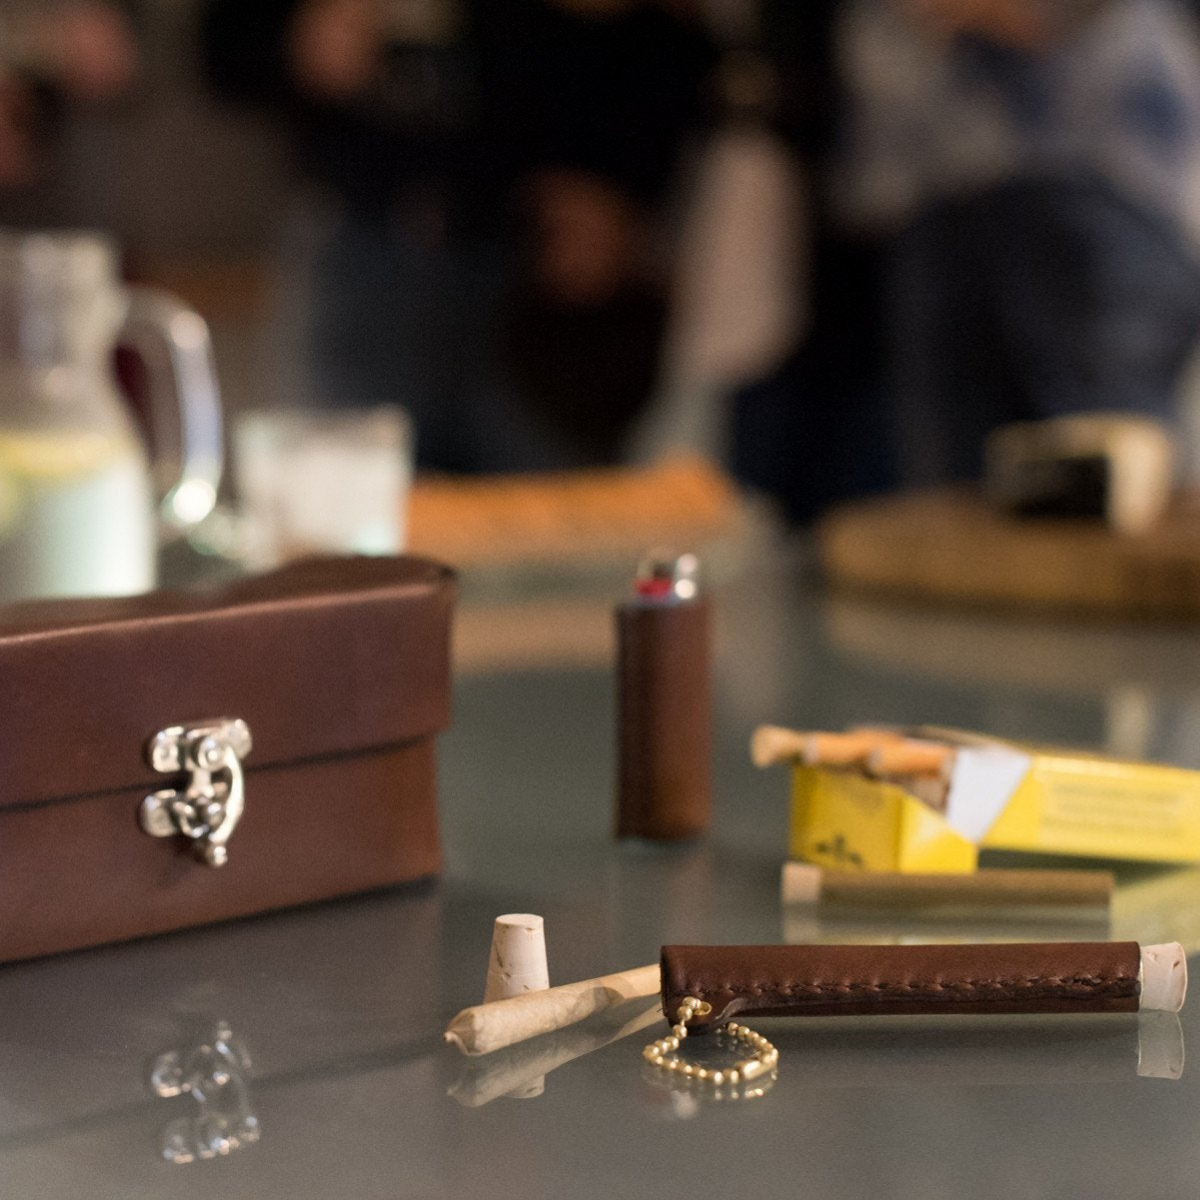 Dark brown genuine leather cigarette case, herbal cigarette holder, and lighter case displayed on a glass table